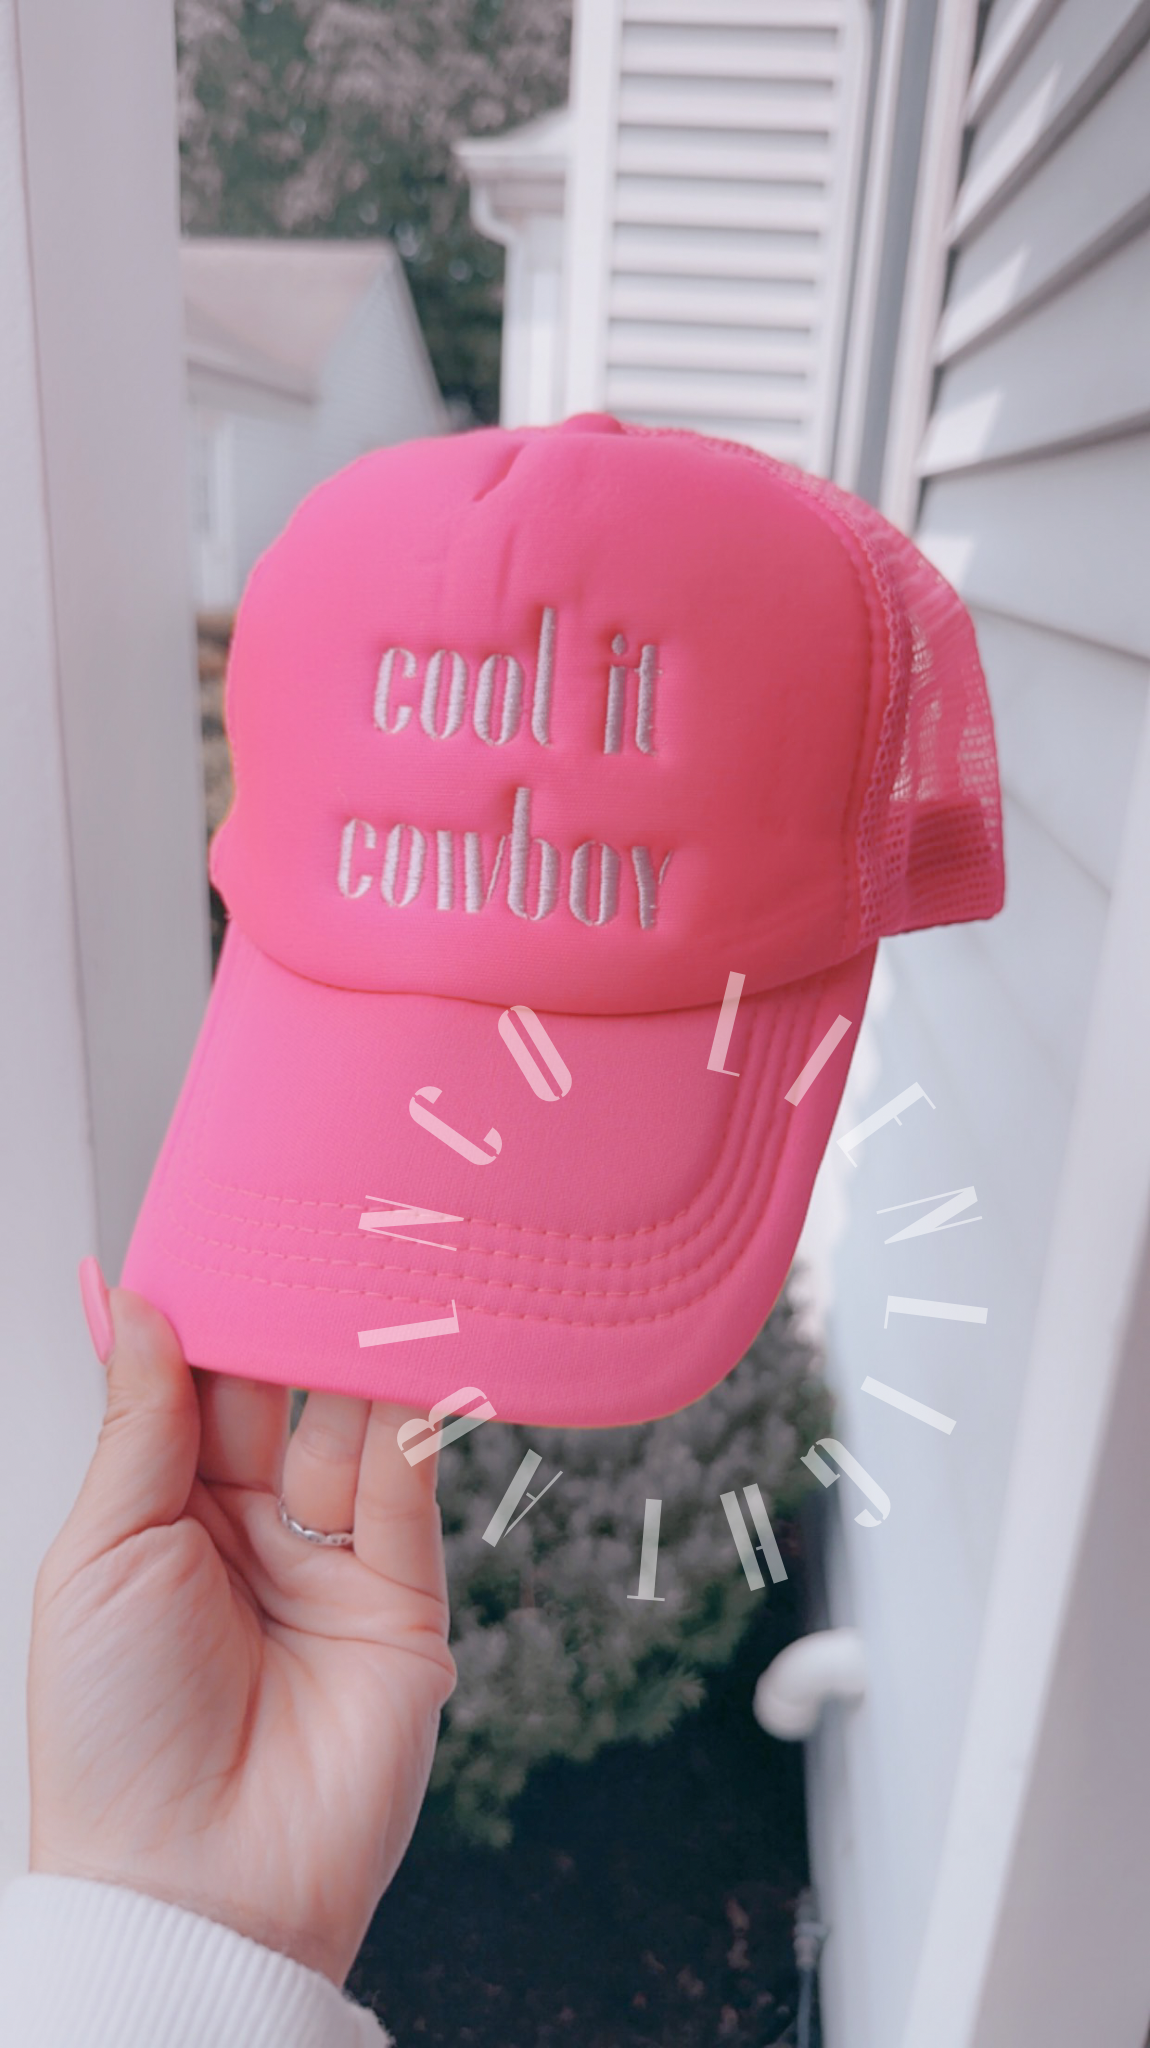 Cool It Cowboy Pink Hats